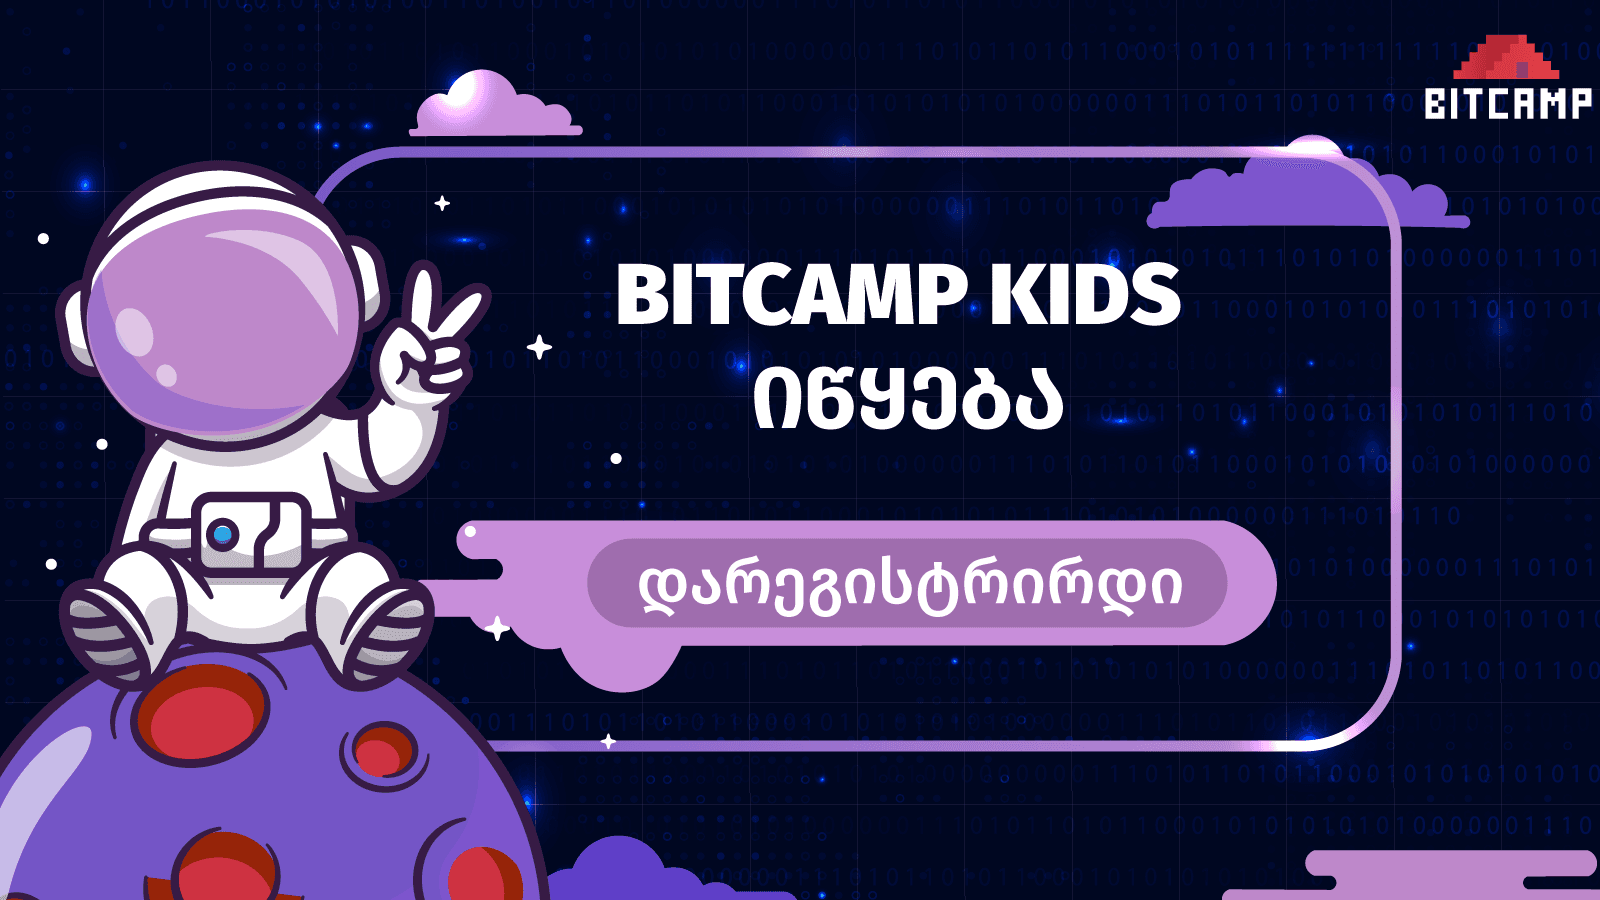 BitCamp Kids იწყება